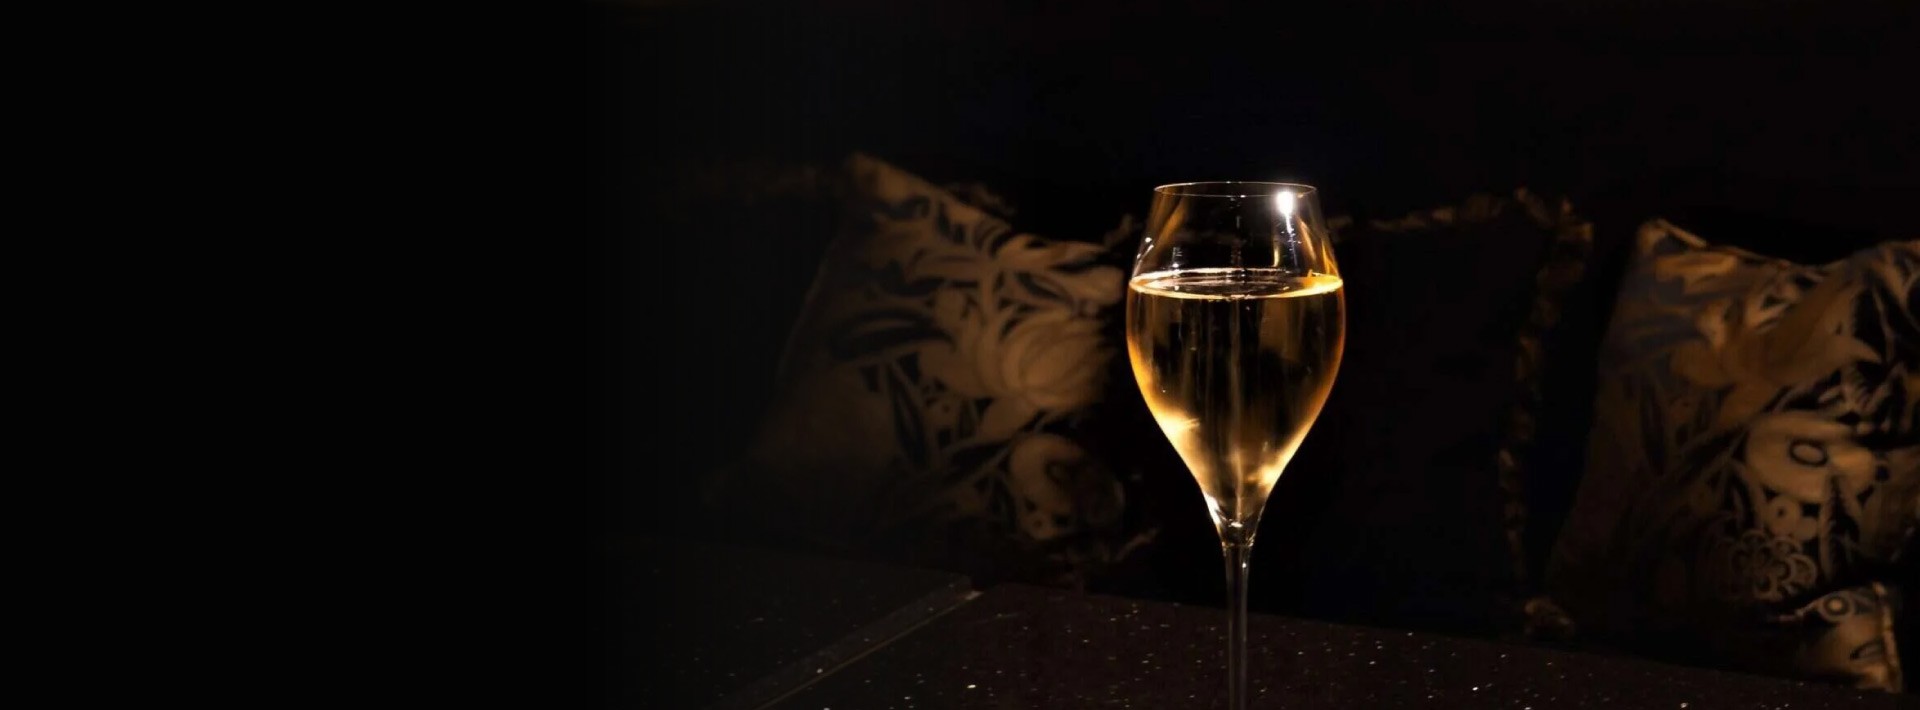 Comprar Champagne Online | Campoluz Enoteca